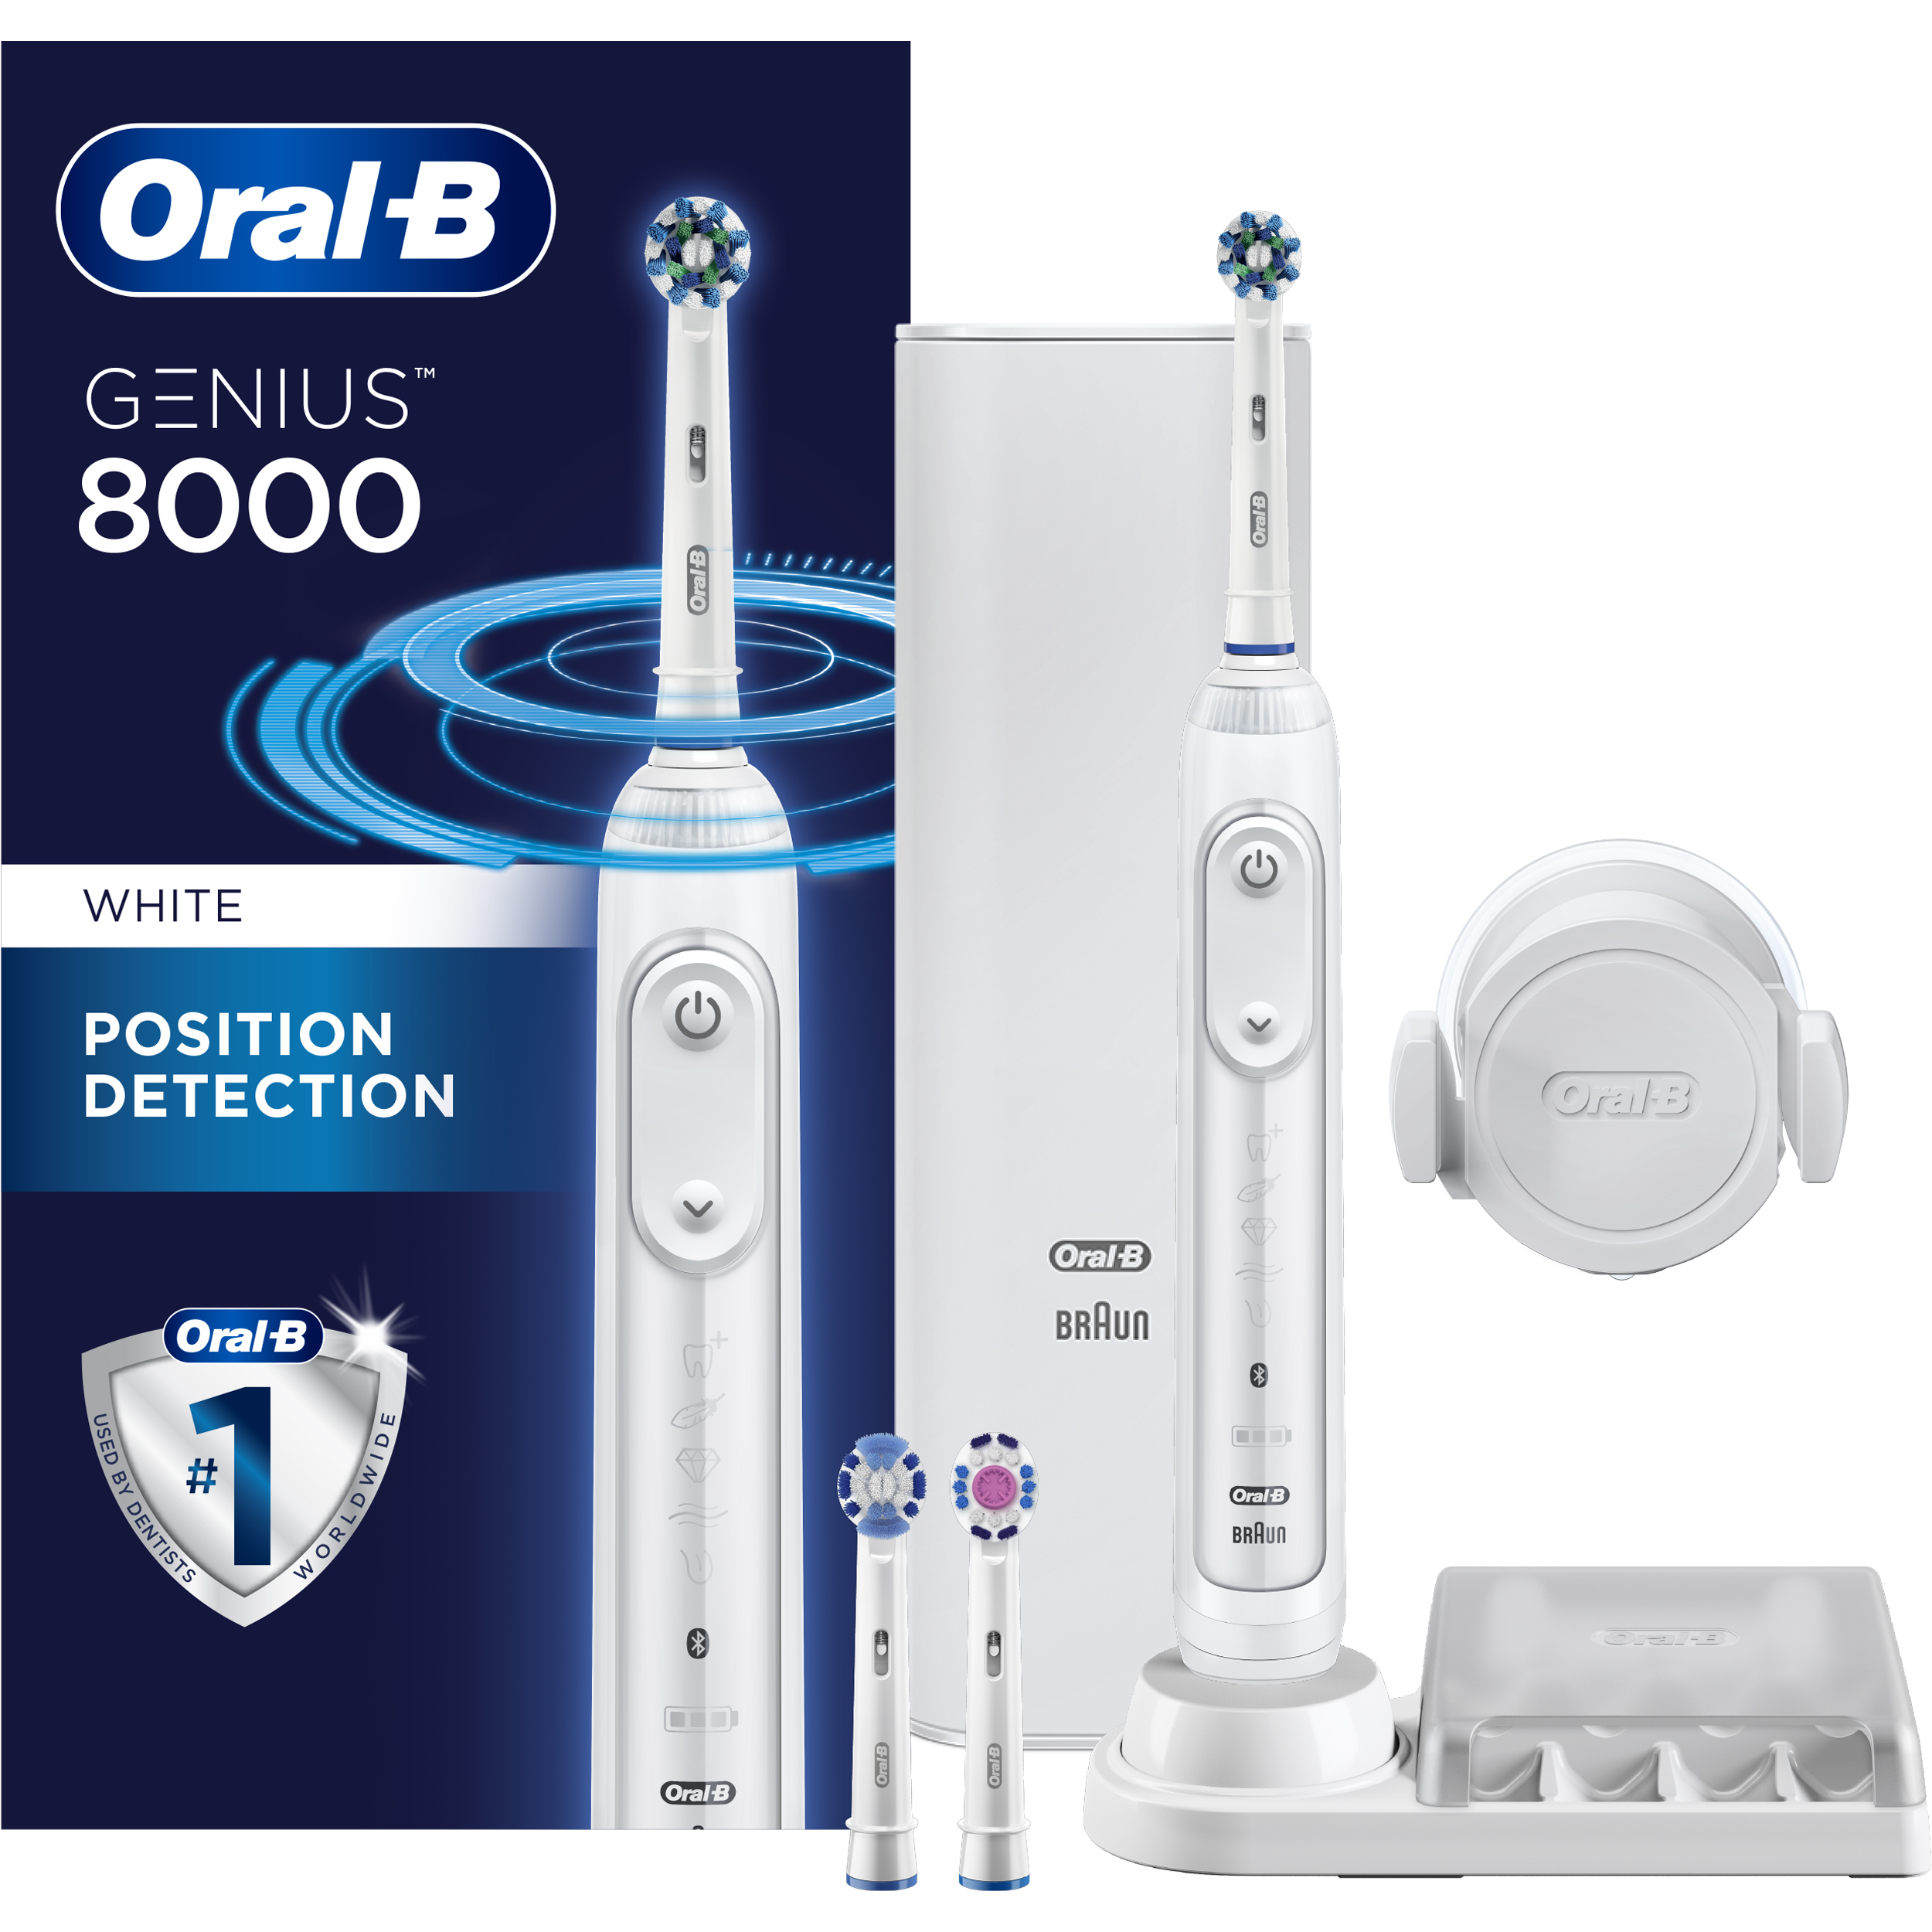 Oral-B 8000 Electronic Toothbrush, White, Powered by Braun - image 1 of 14